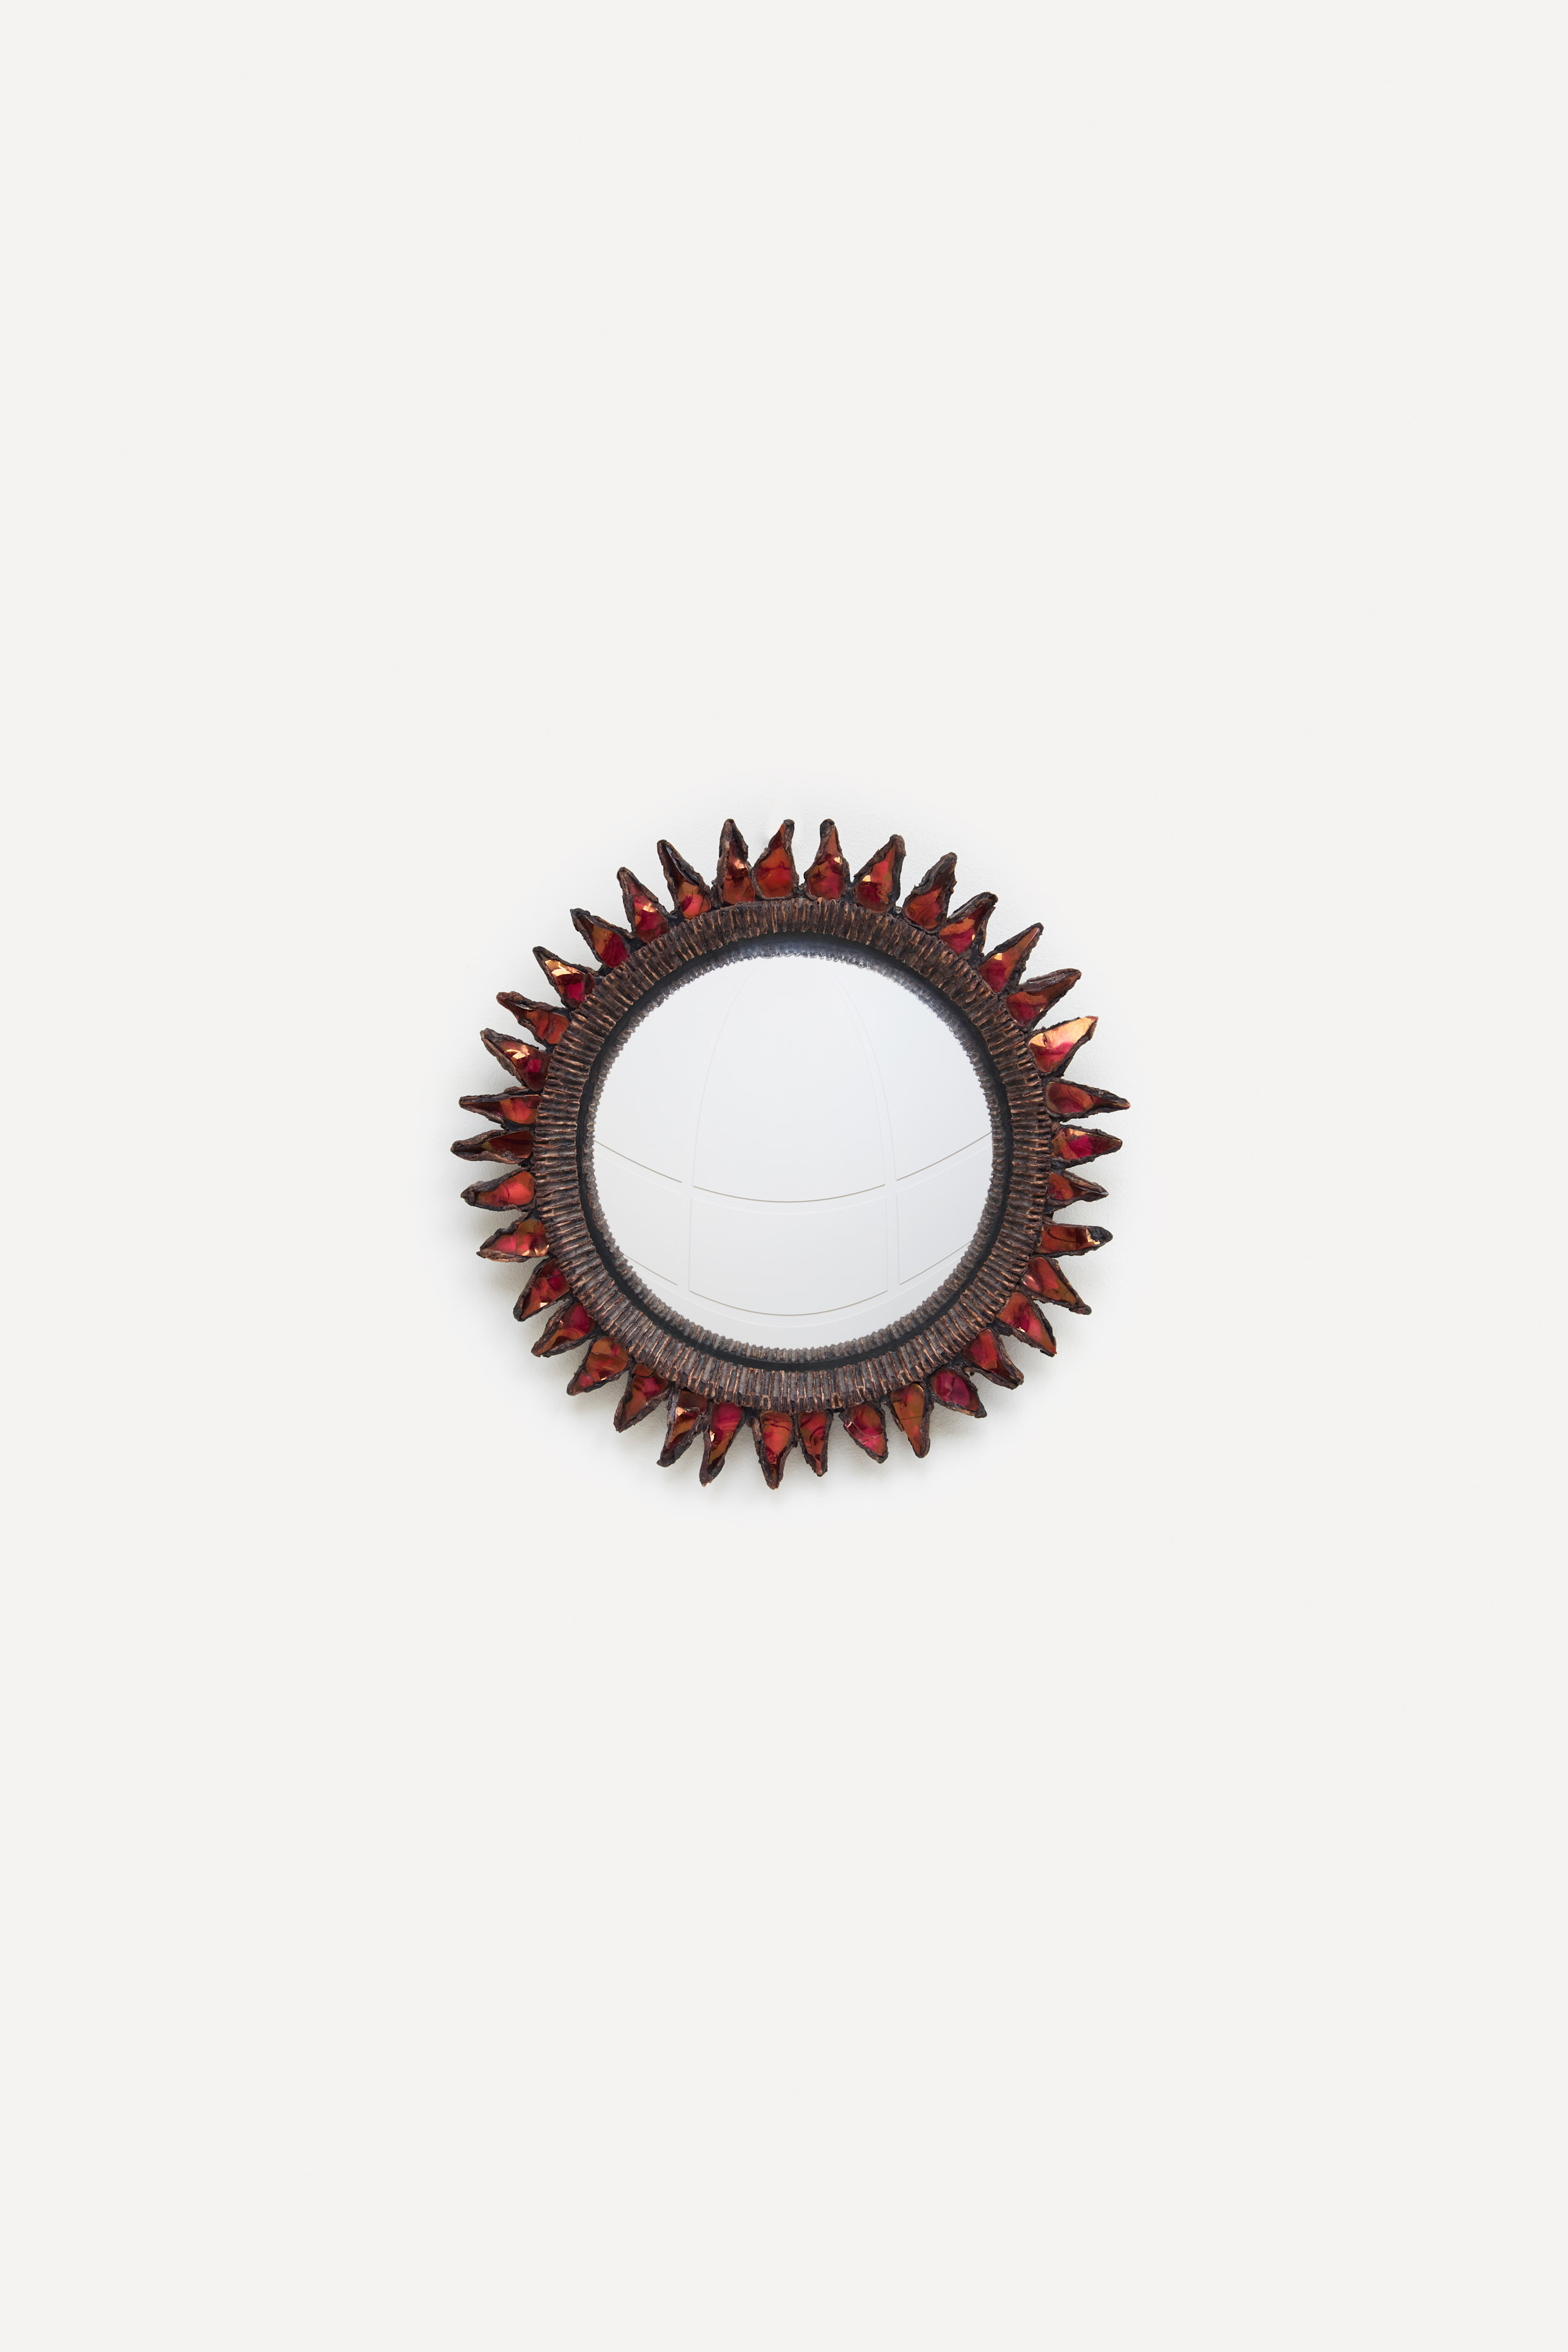 Line Vautrin, “Chardon” mirror, vue 01